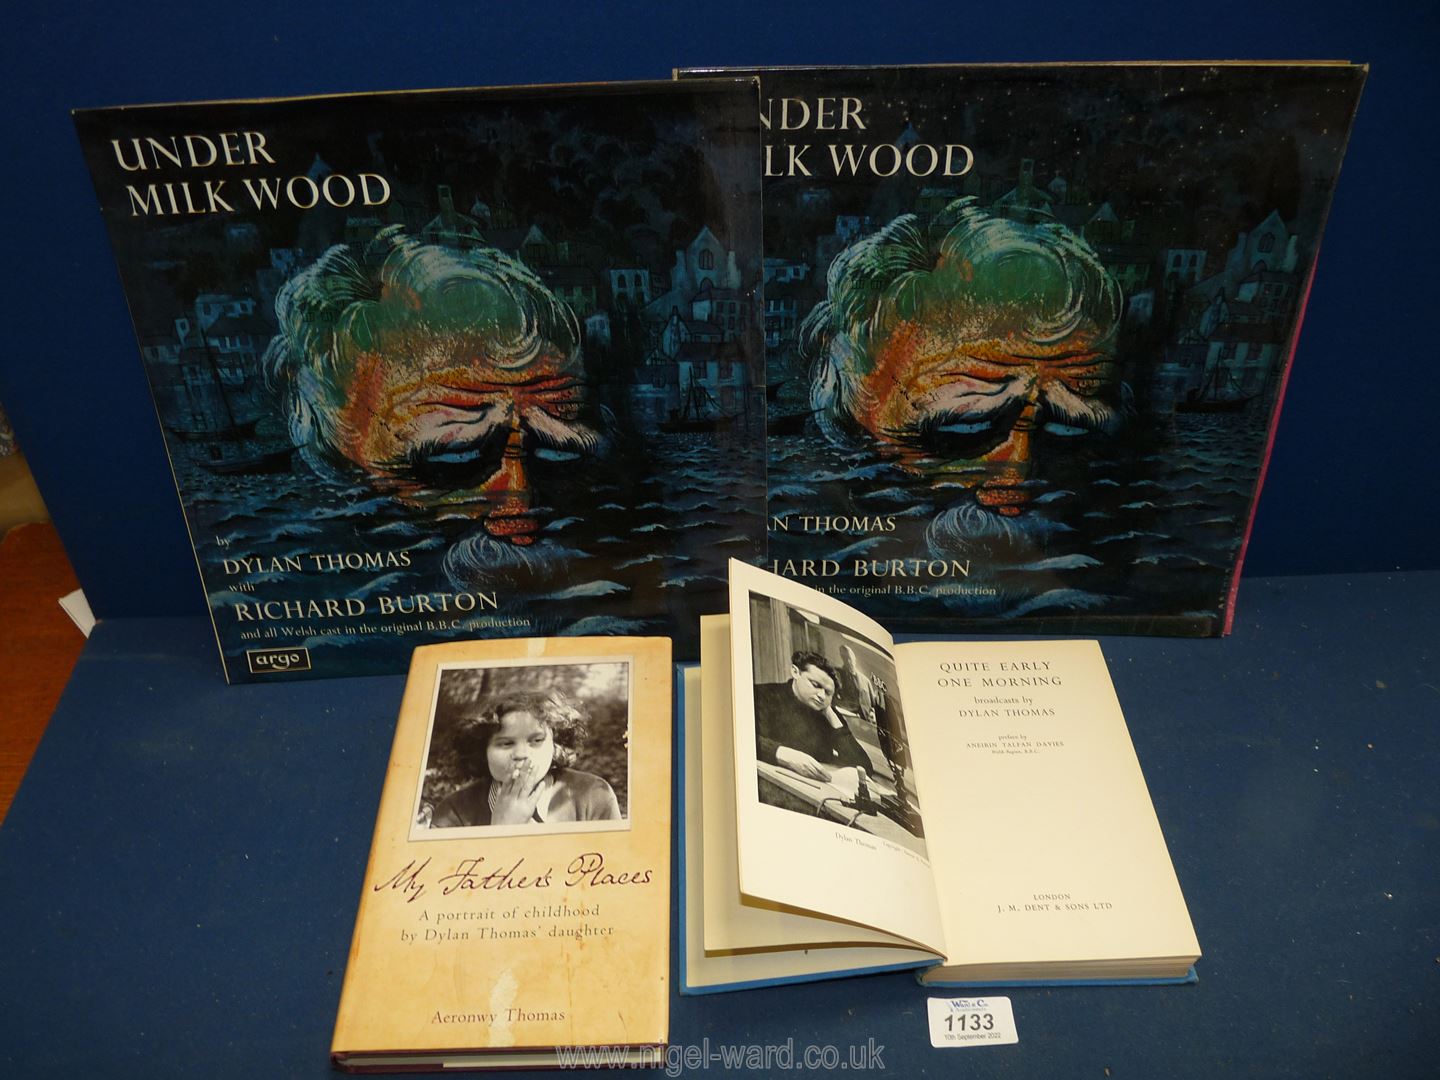 An original 1954 LP recording of Dylan Thomas's 'Under Milk Wood' by Richard Burton,